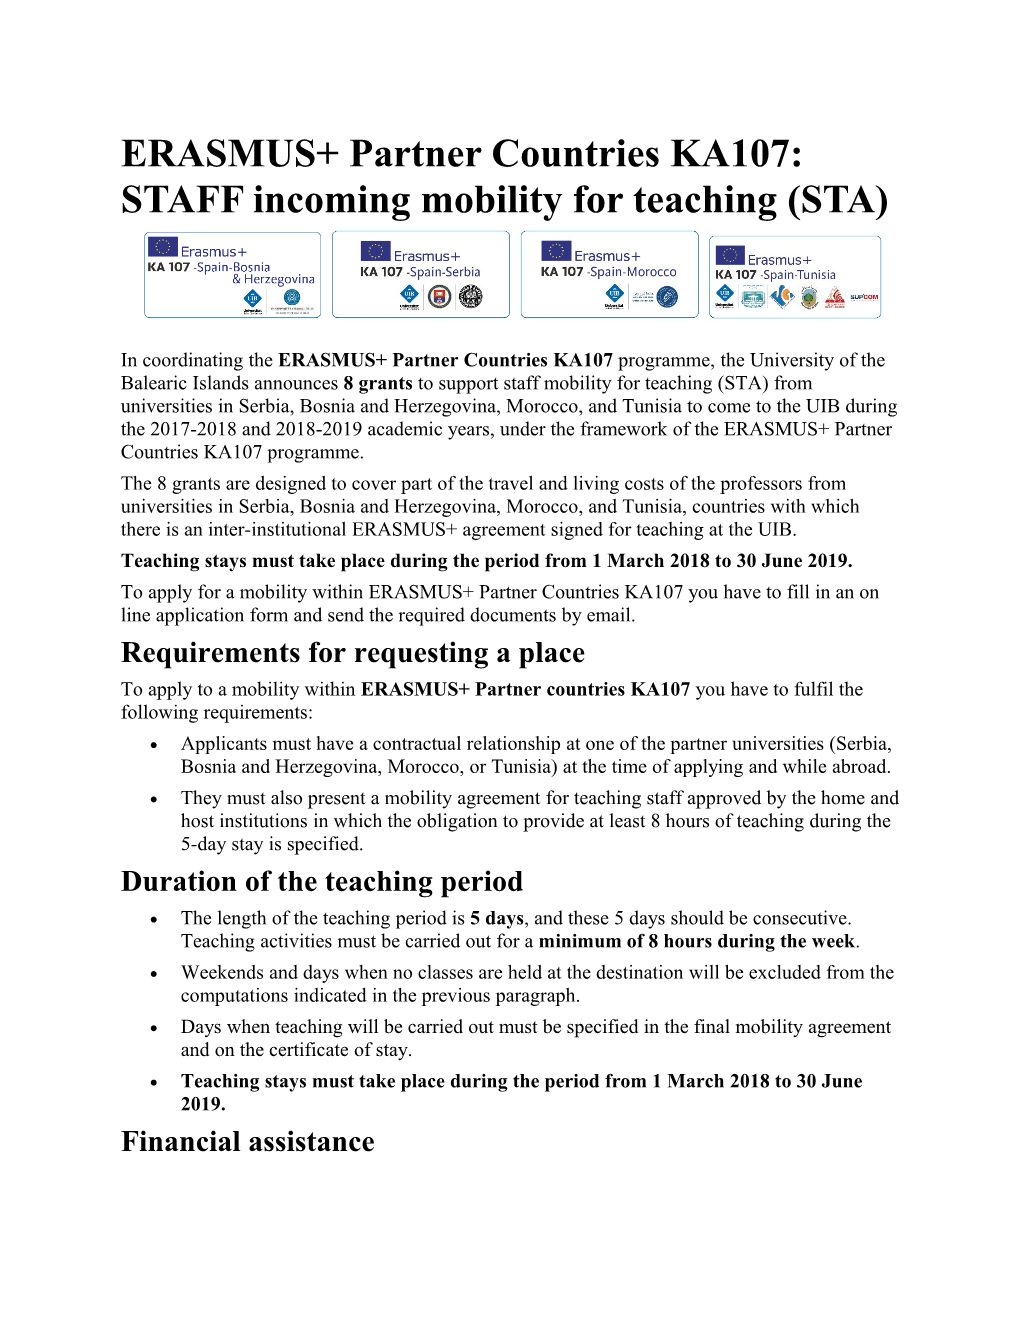 ERASMUS+ Partner Countries KA107: STAFF Incoming Mobility for Teaching (STA)